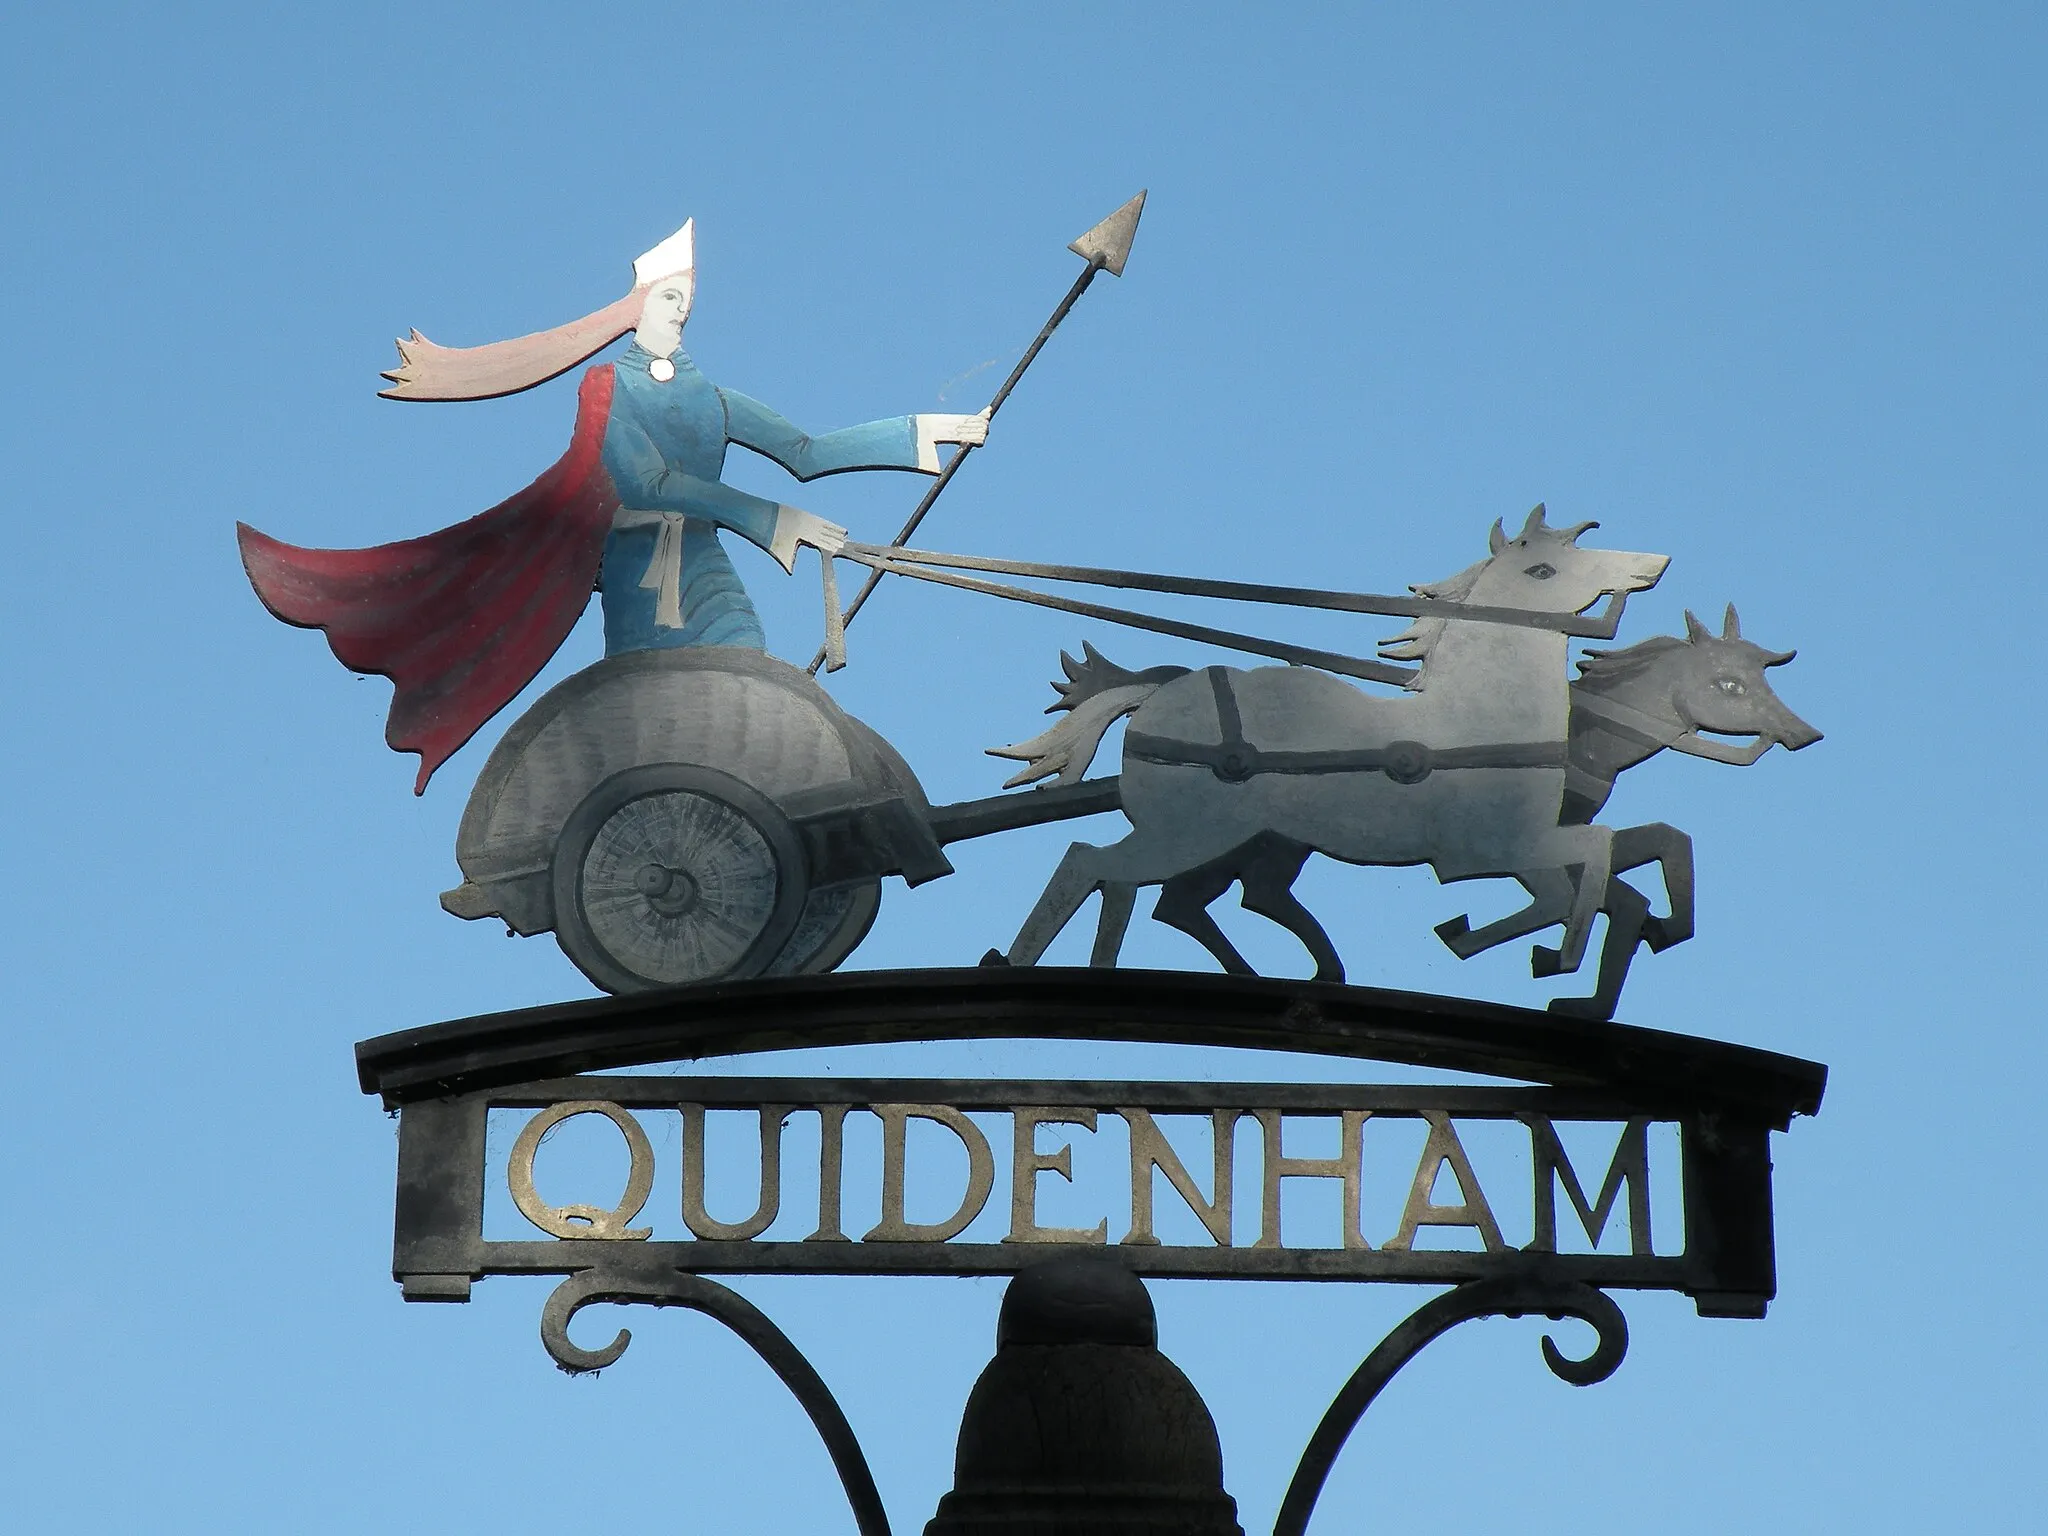 Photo showing: The village sign at Quidenham